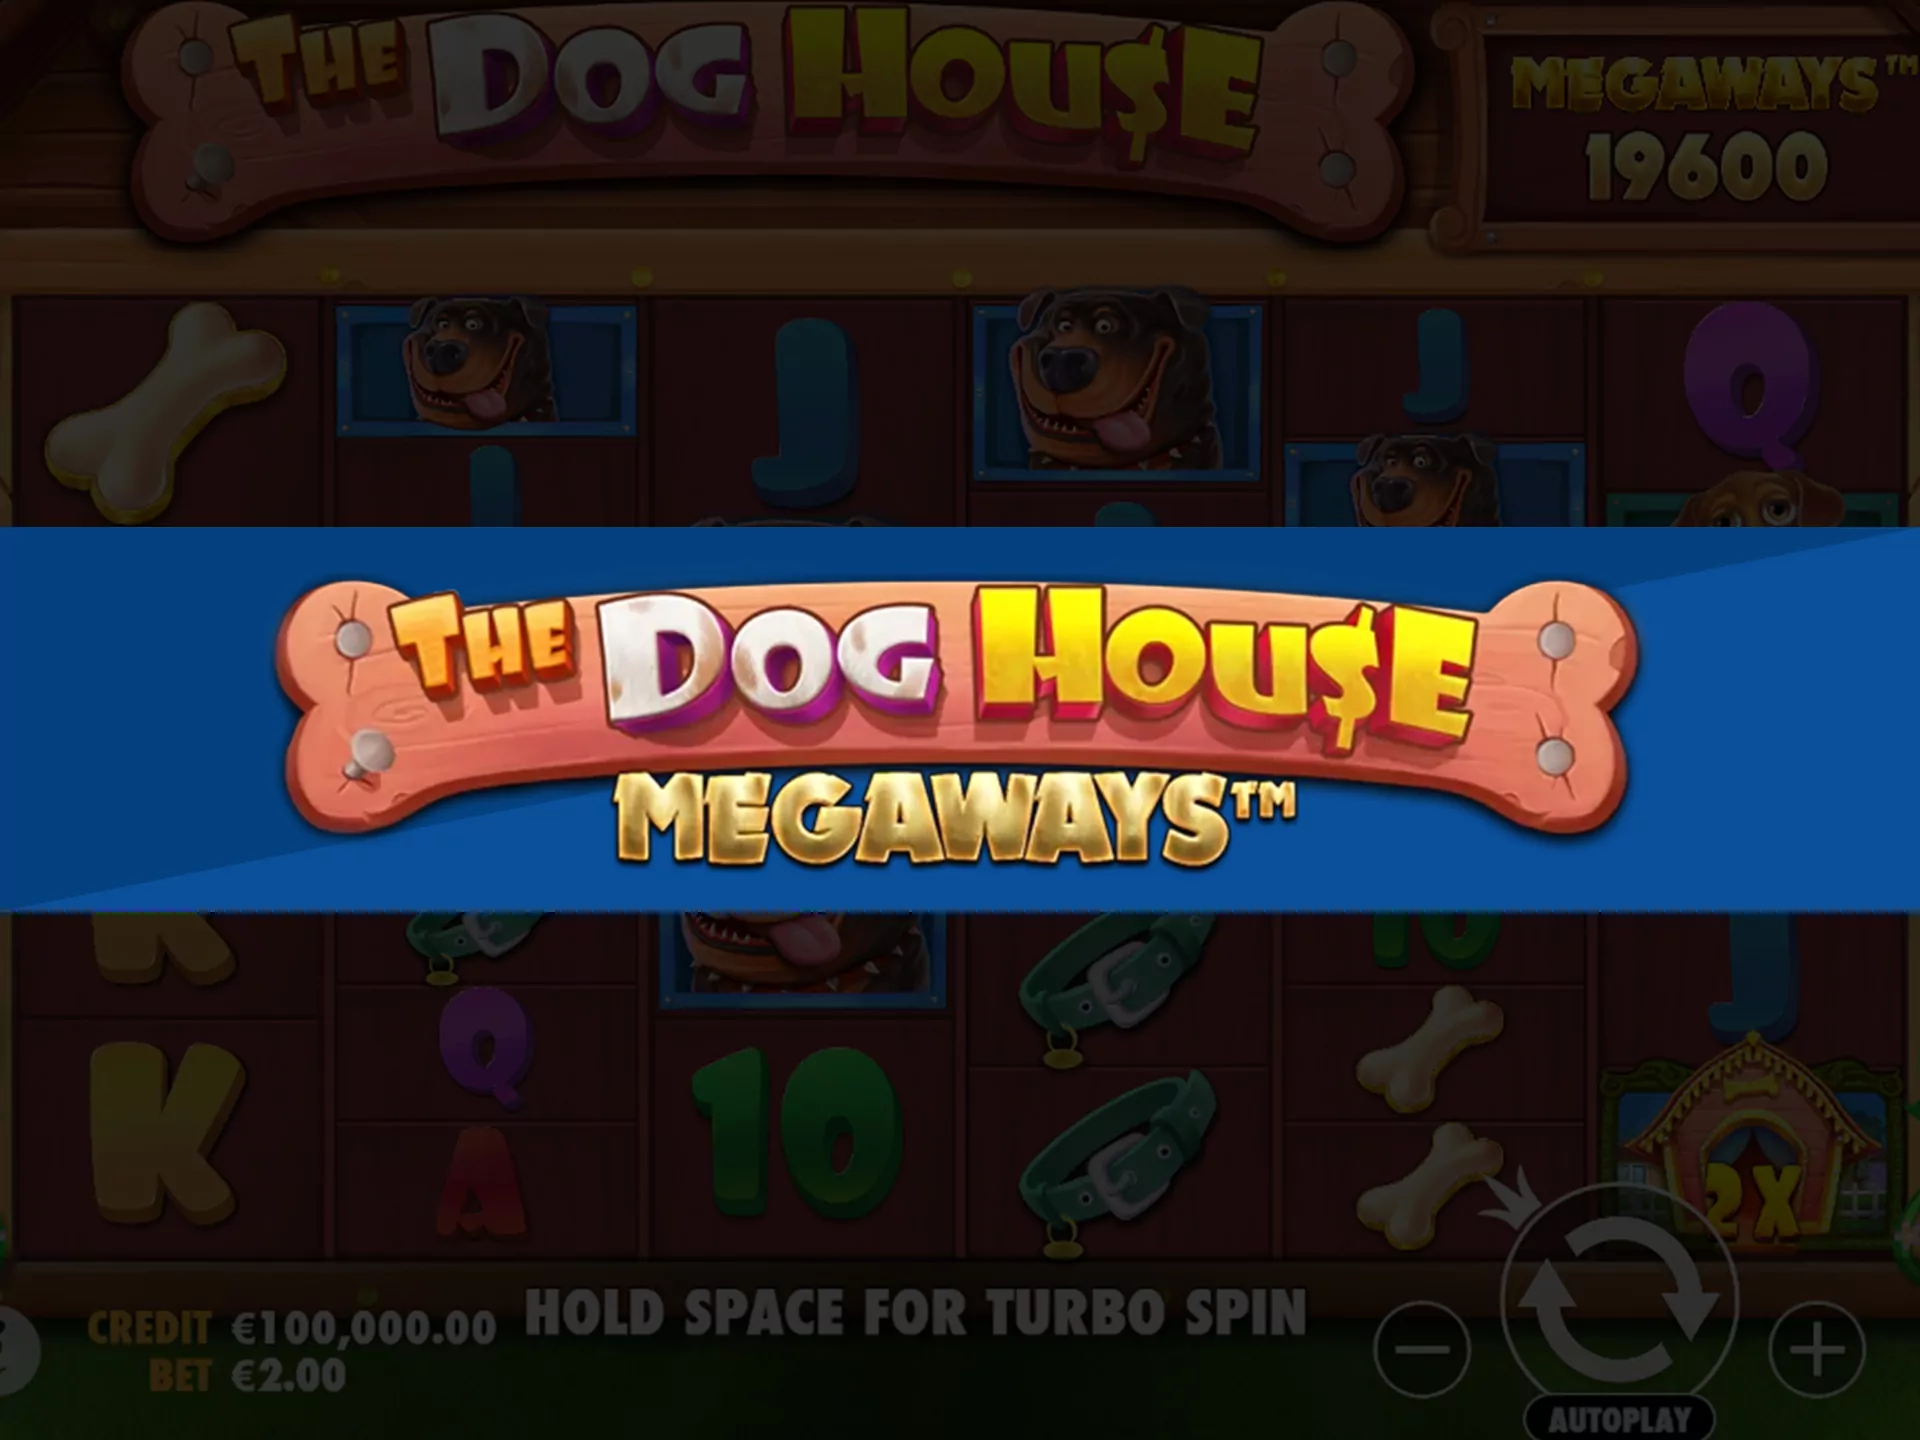 Gain winnings at Dog House Megaways.